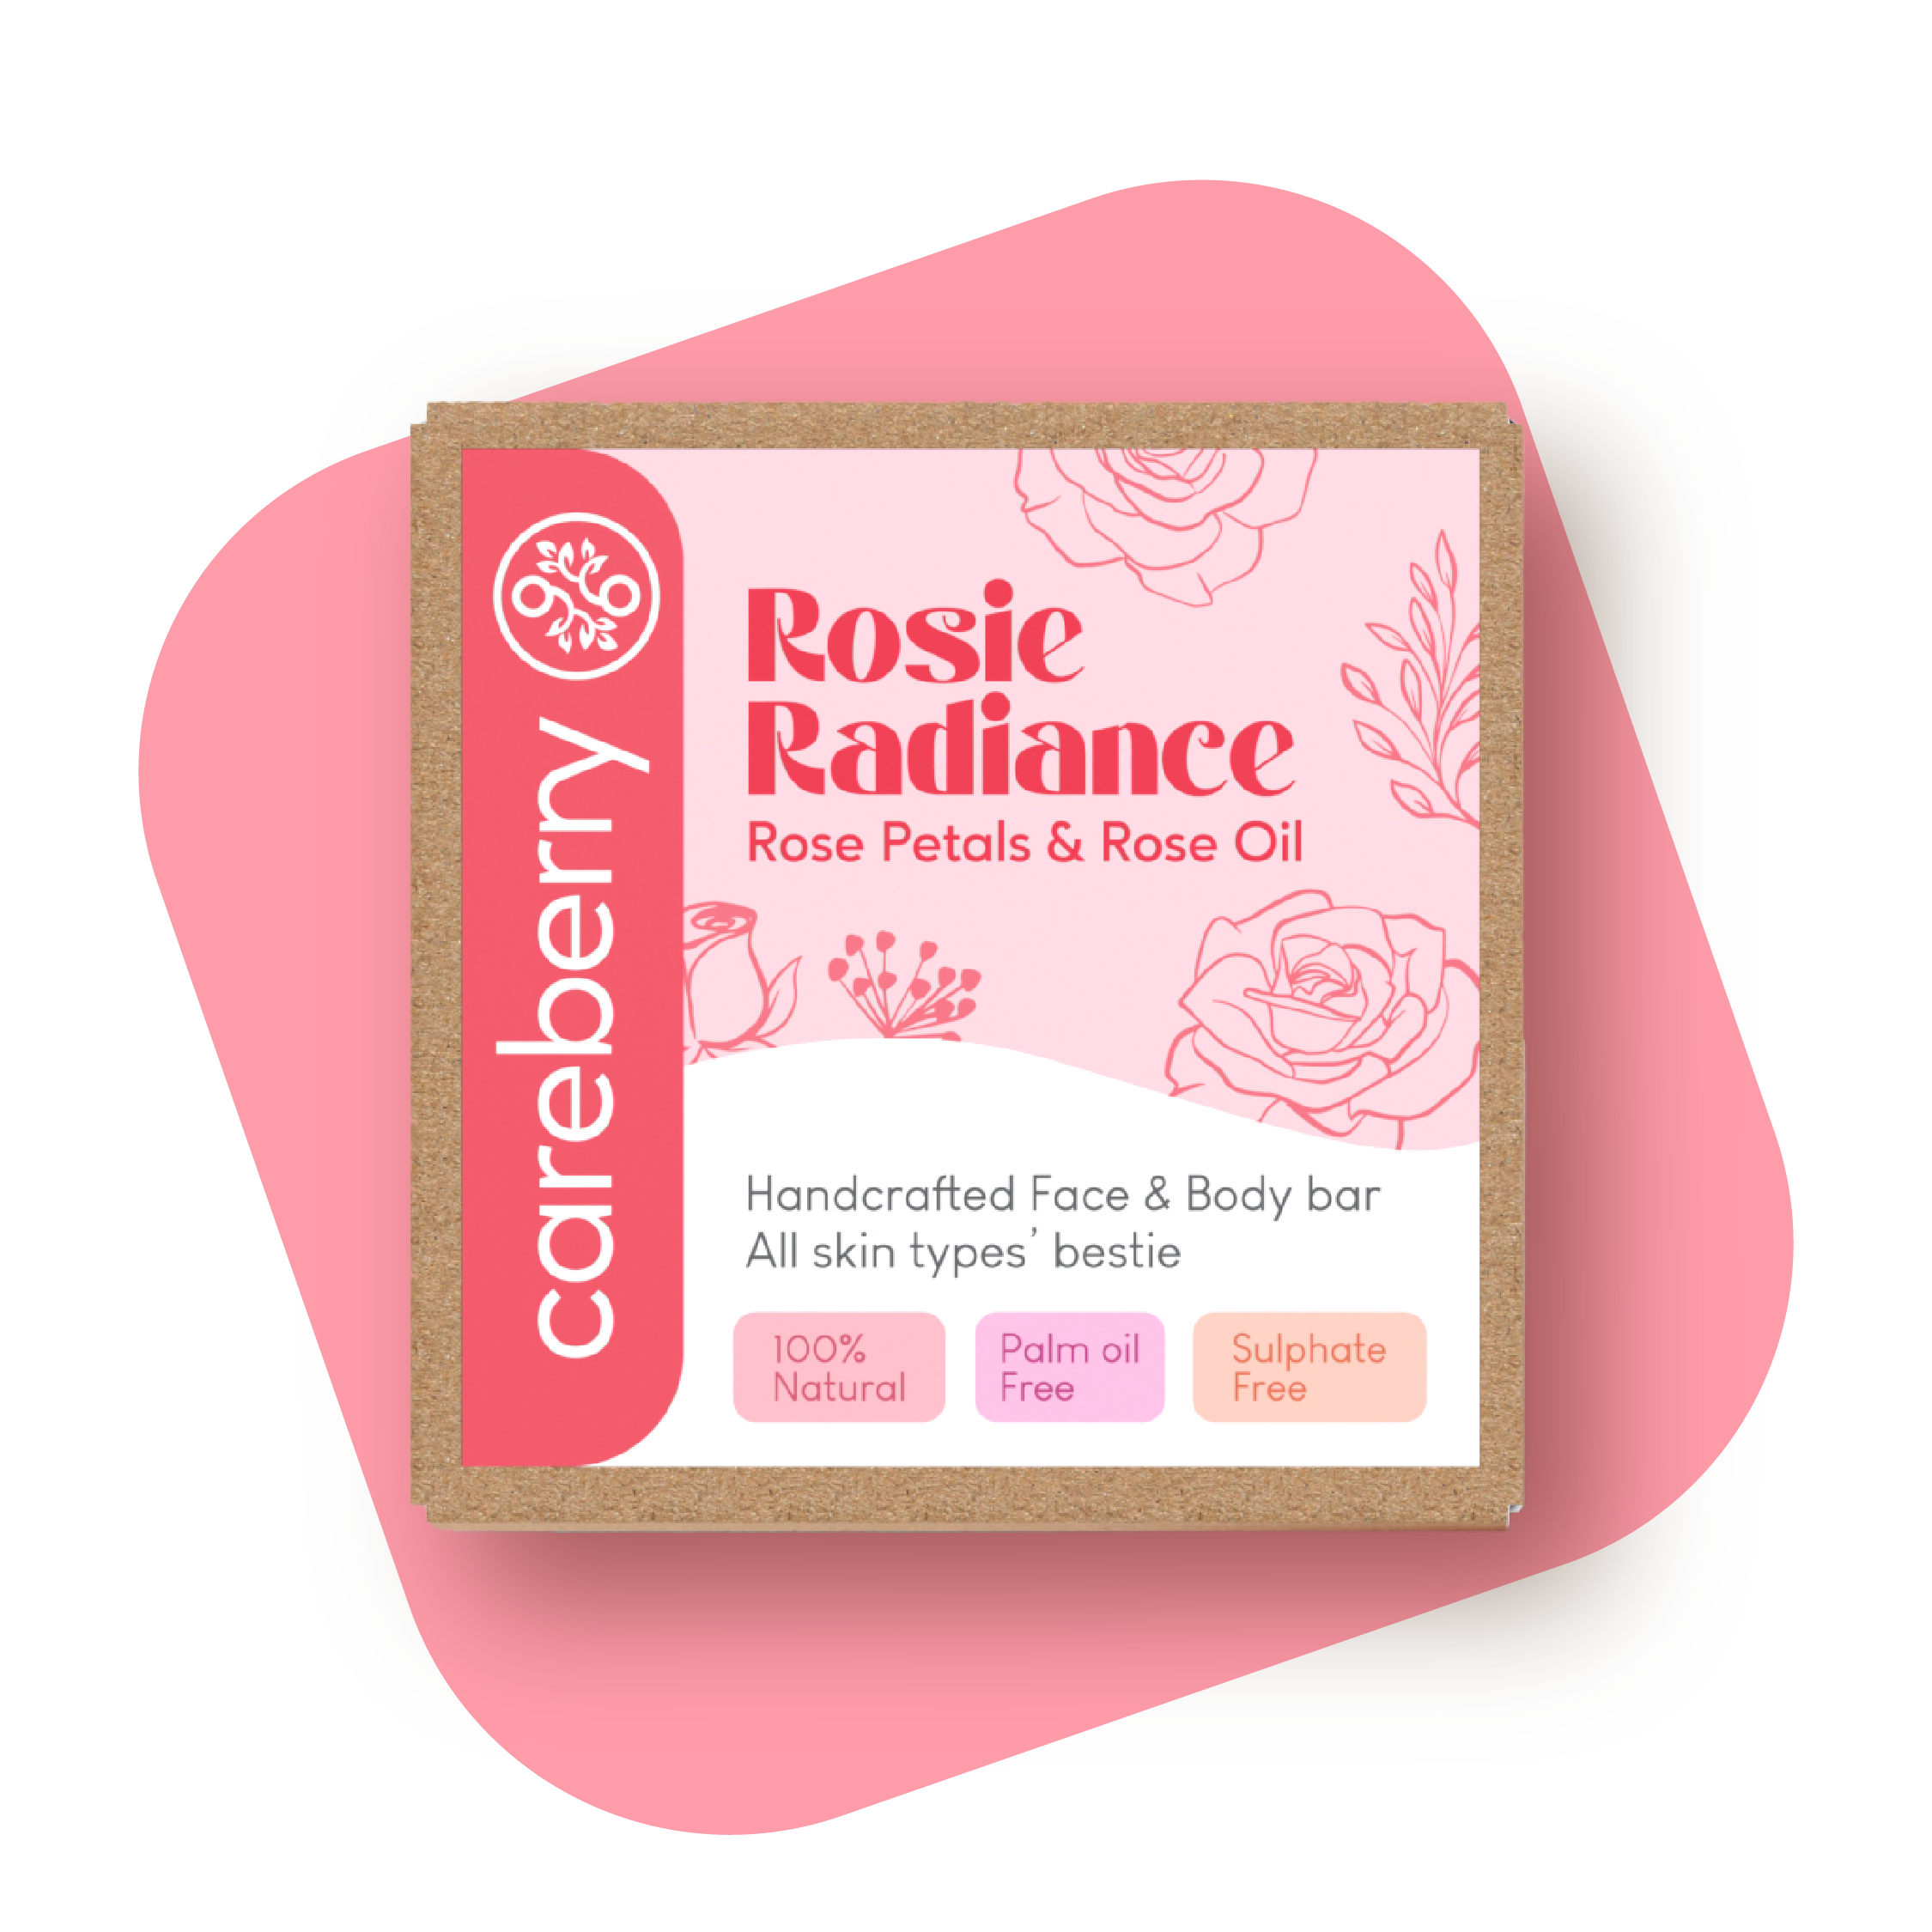 Rose Petals & Rose Oil Face & Body Bar